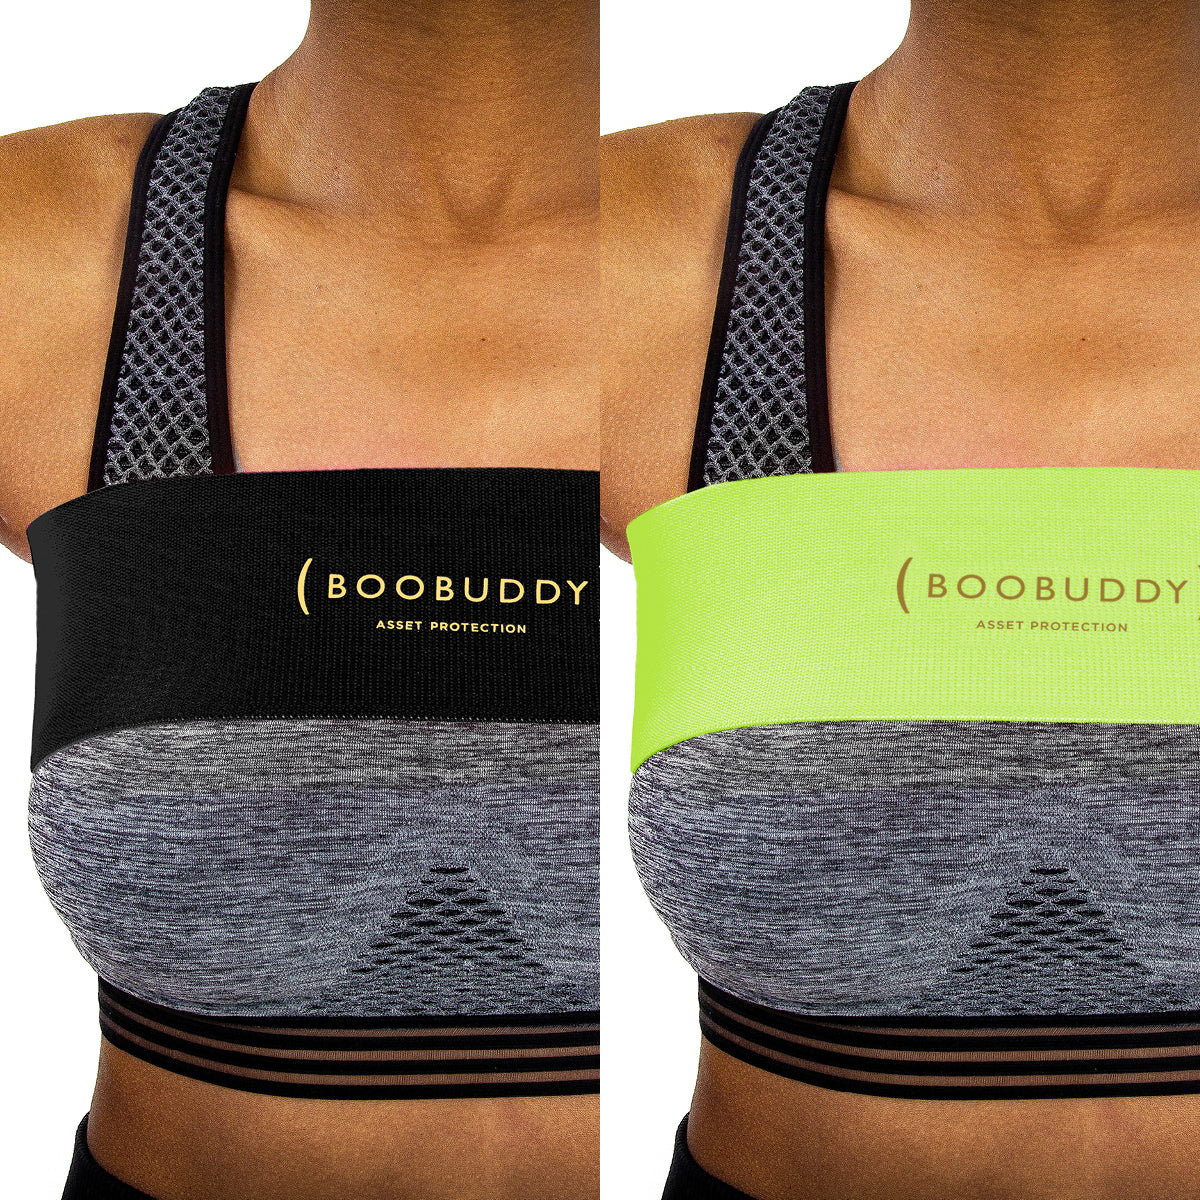 Boobuddy Adjustable Breast Support Band | Black & Green Bundle | How to Wear a Boobuddy